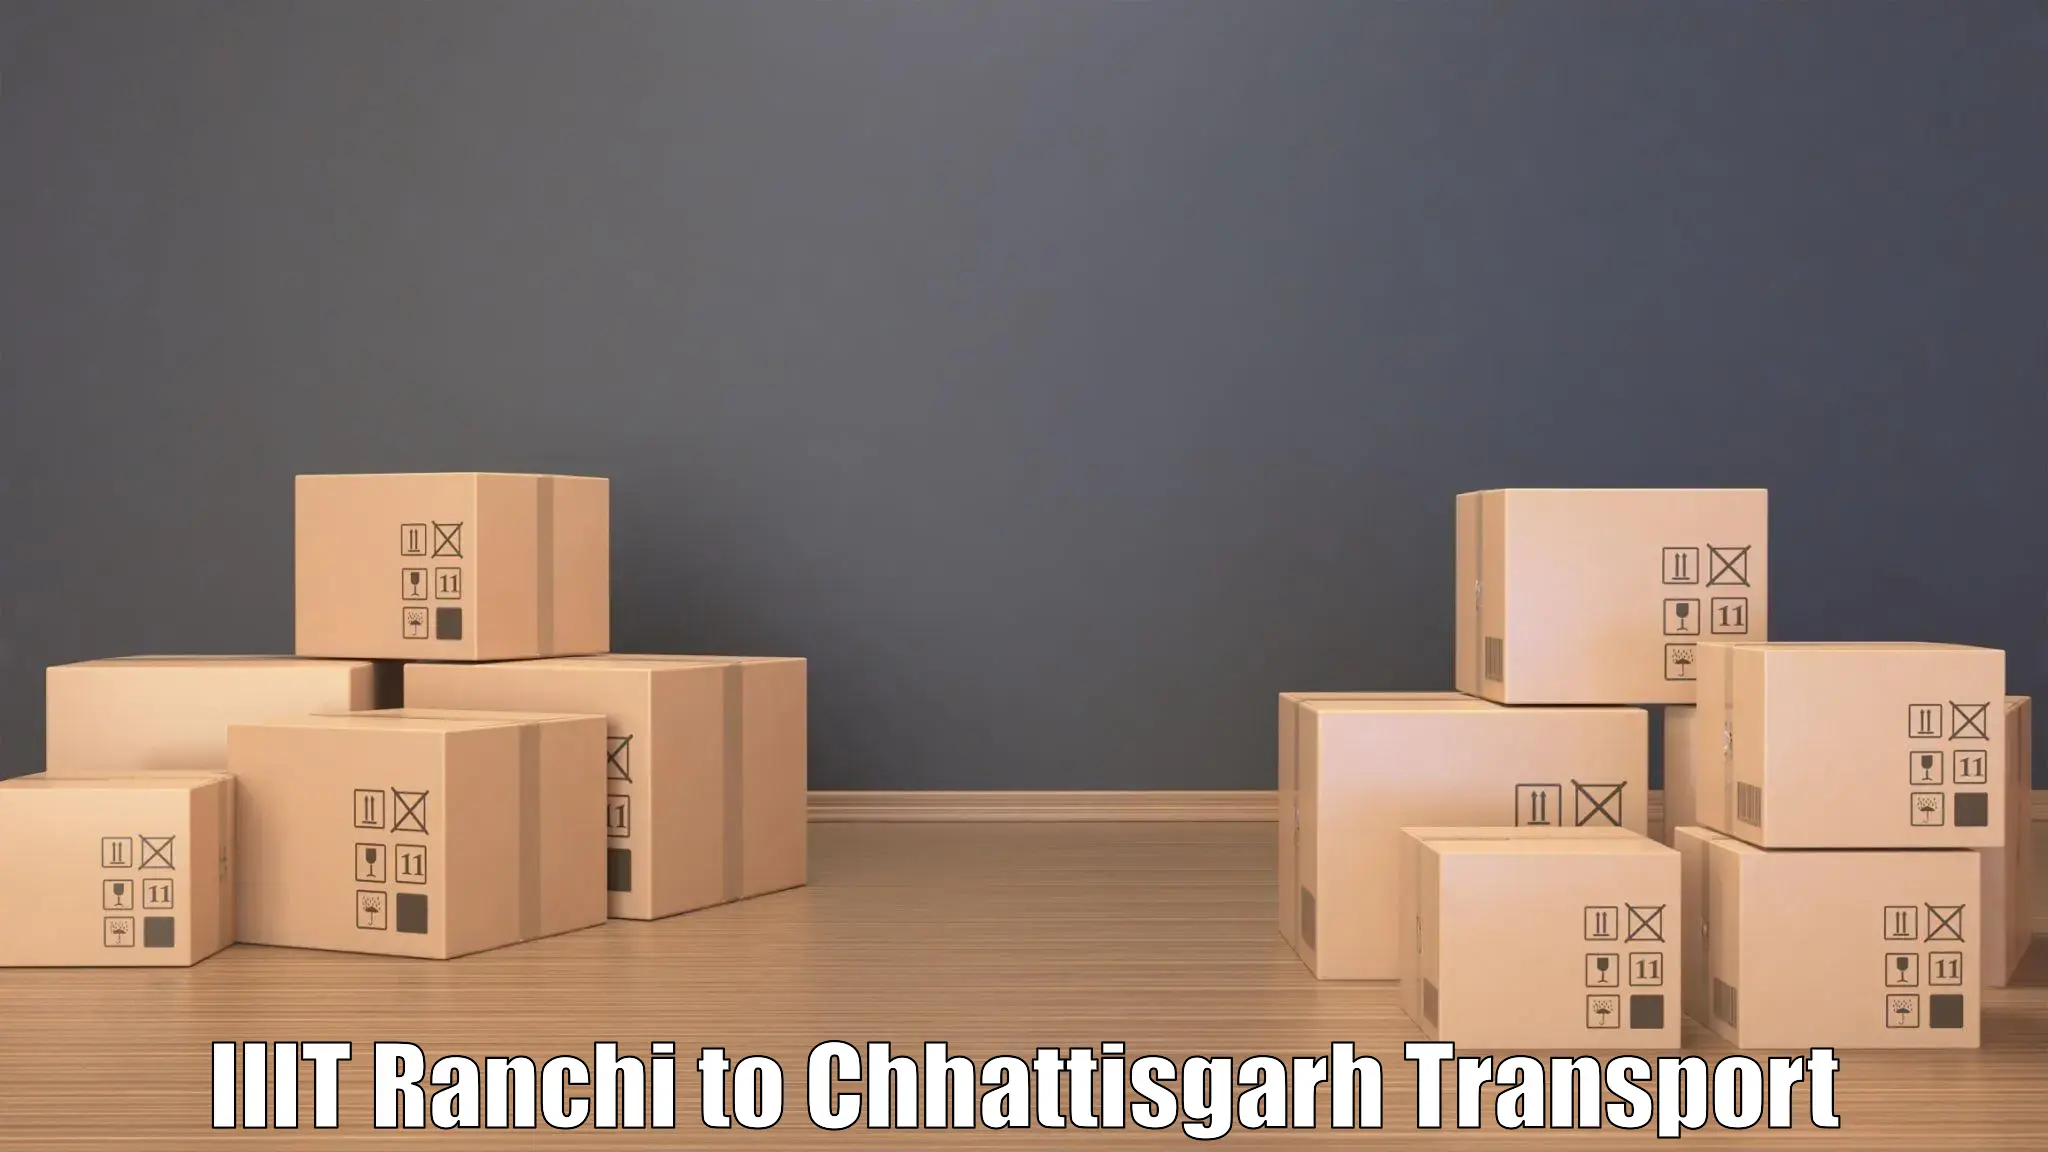 Daily transport service IIIT Ranchi to Berla